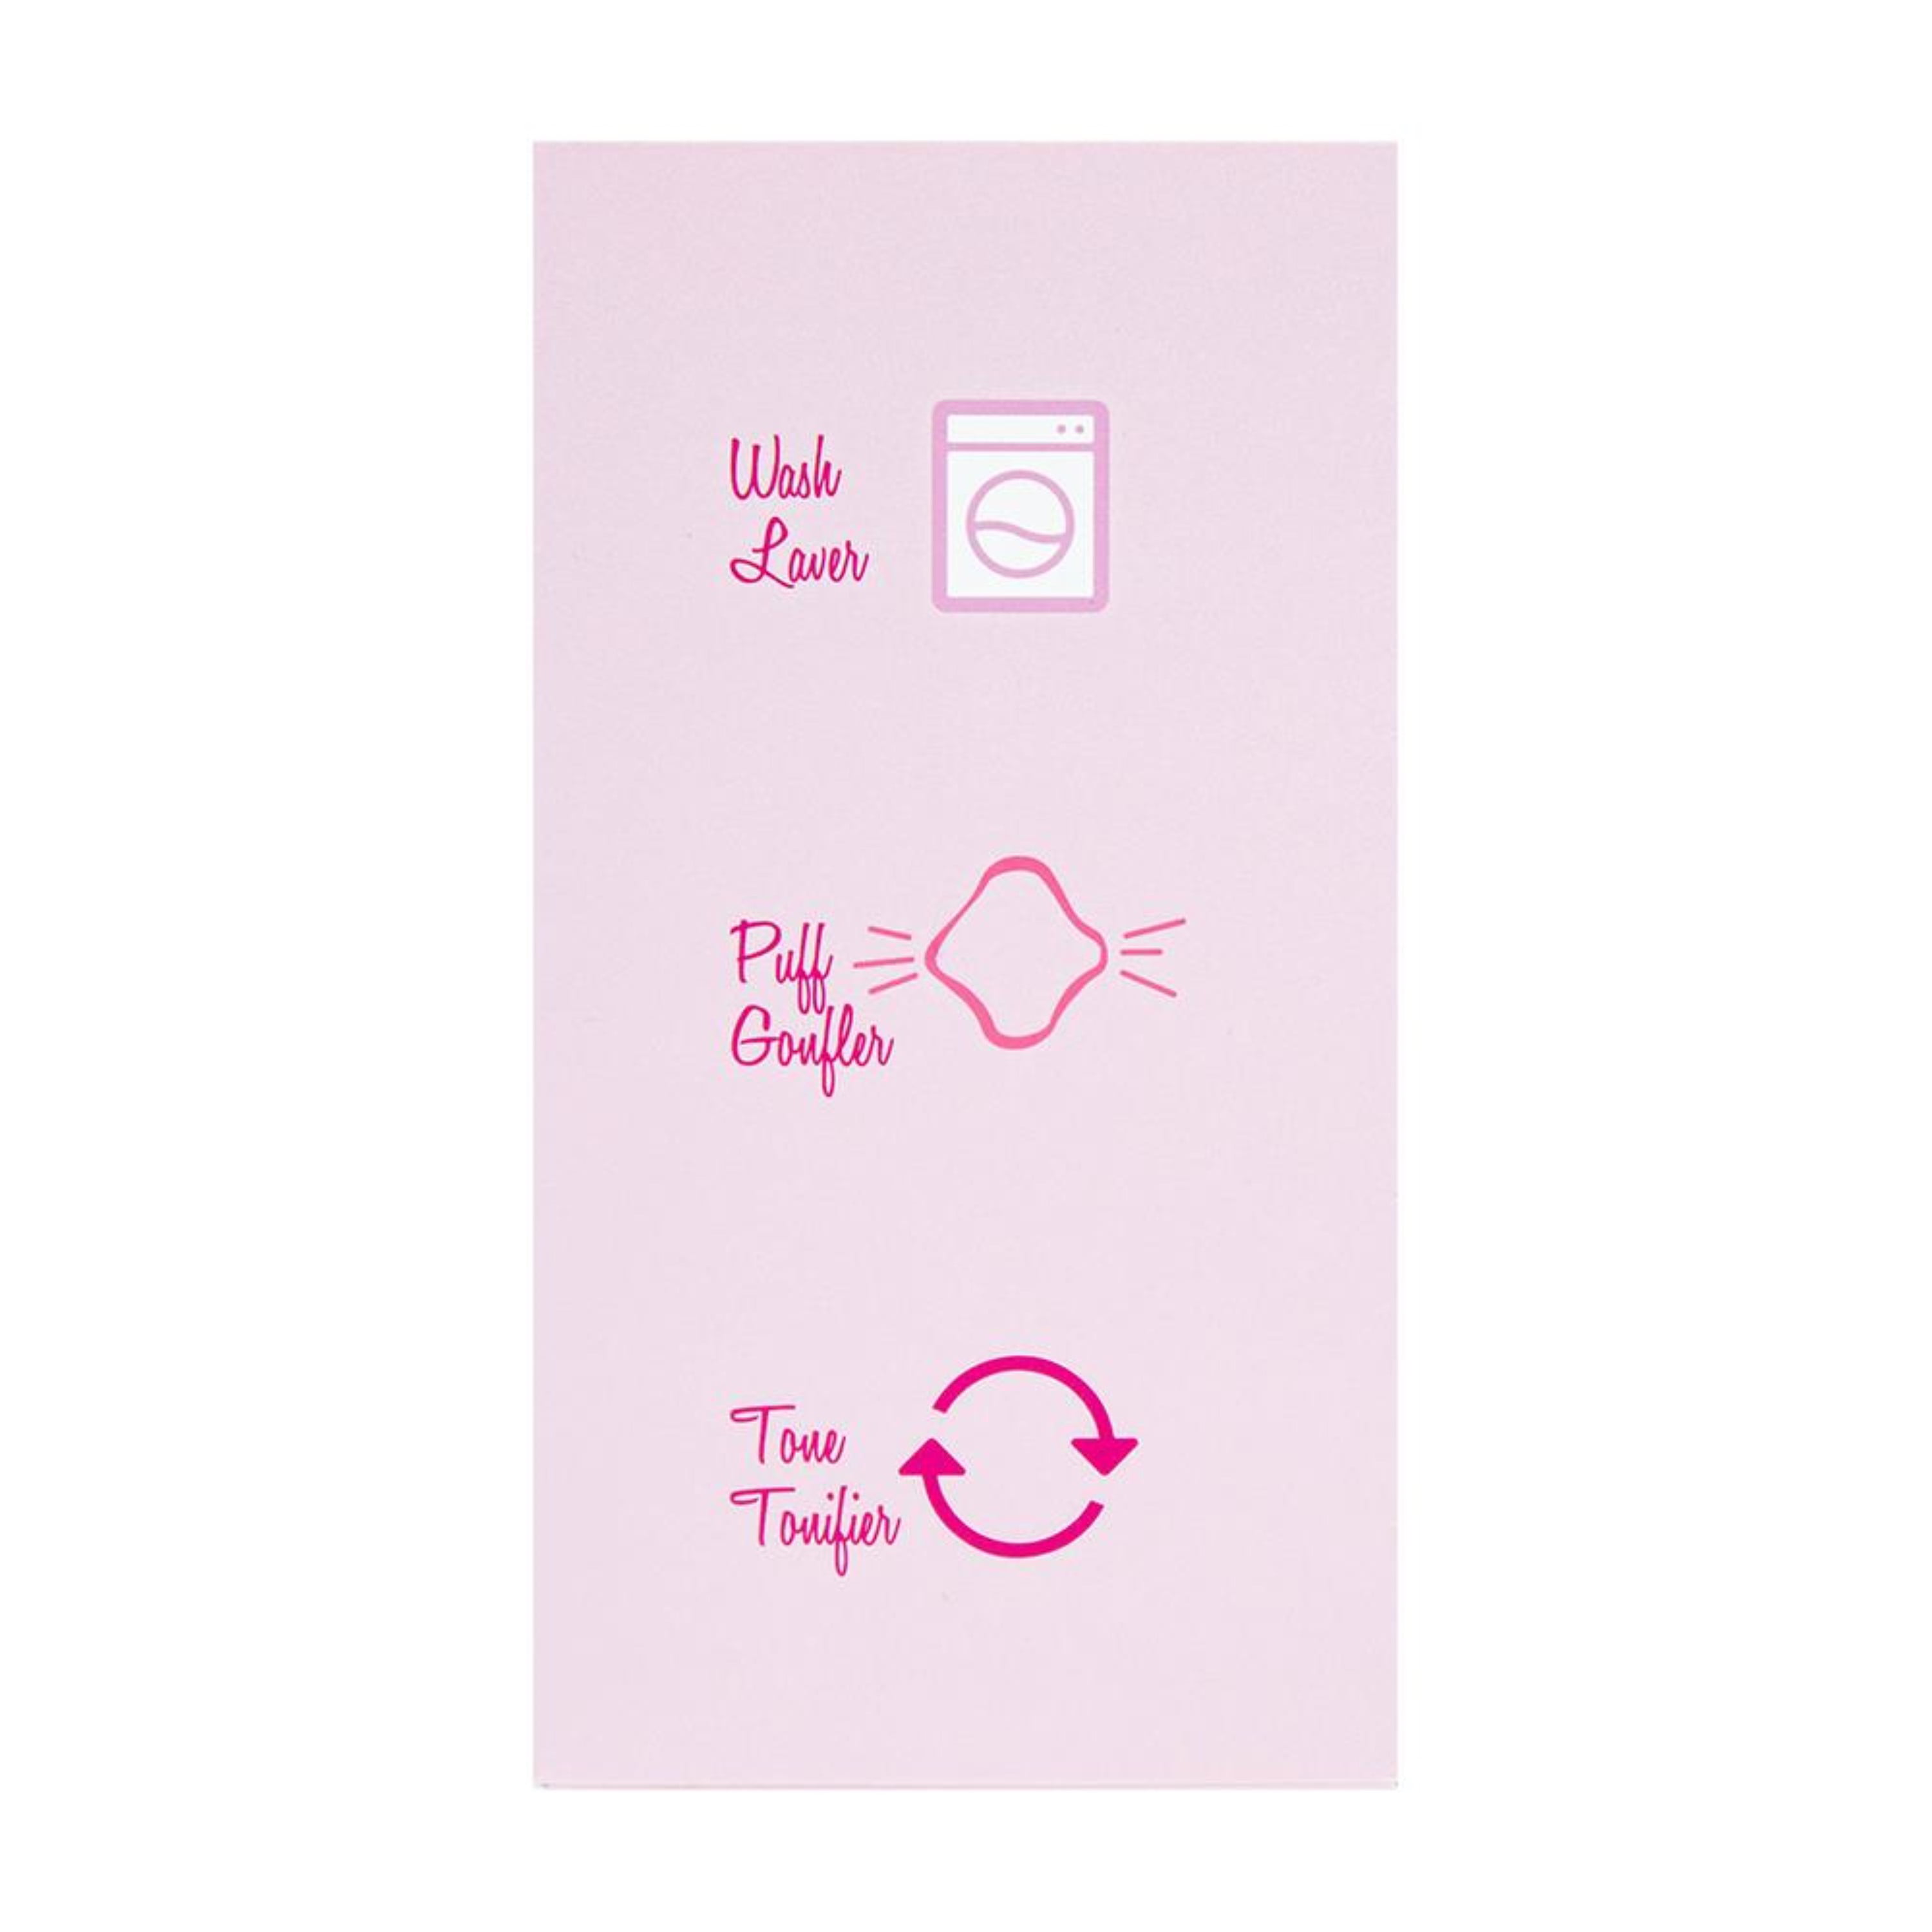 PUFF Eraser: 2n1 Gua Sha – The Original MakeUp Eraser